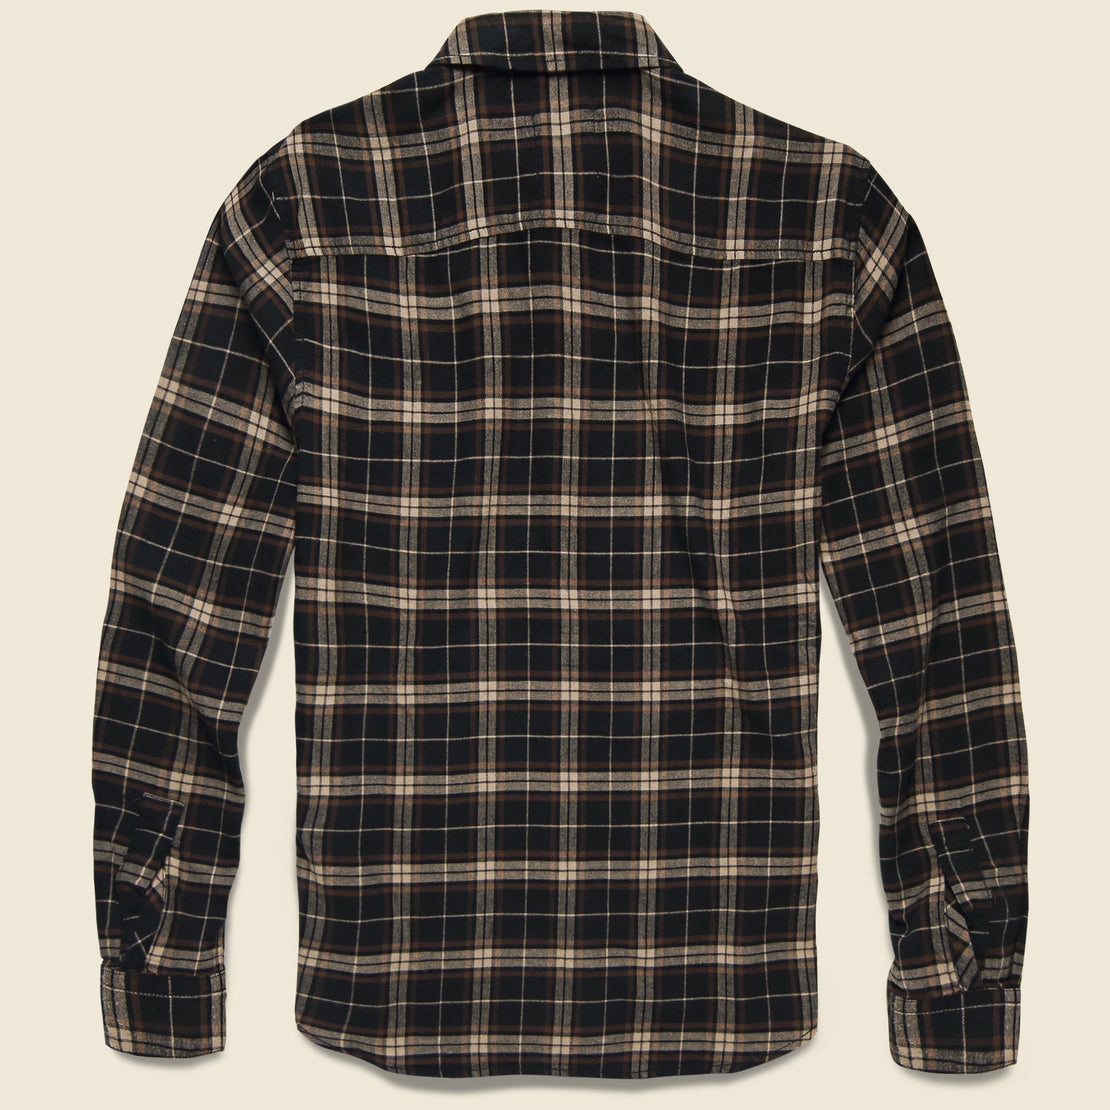 Tartan Shirt - Black - Life After Denim - STAG Provisions - Tops - L/S Woven - Plaid